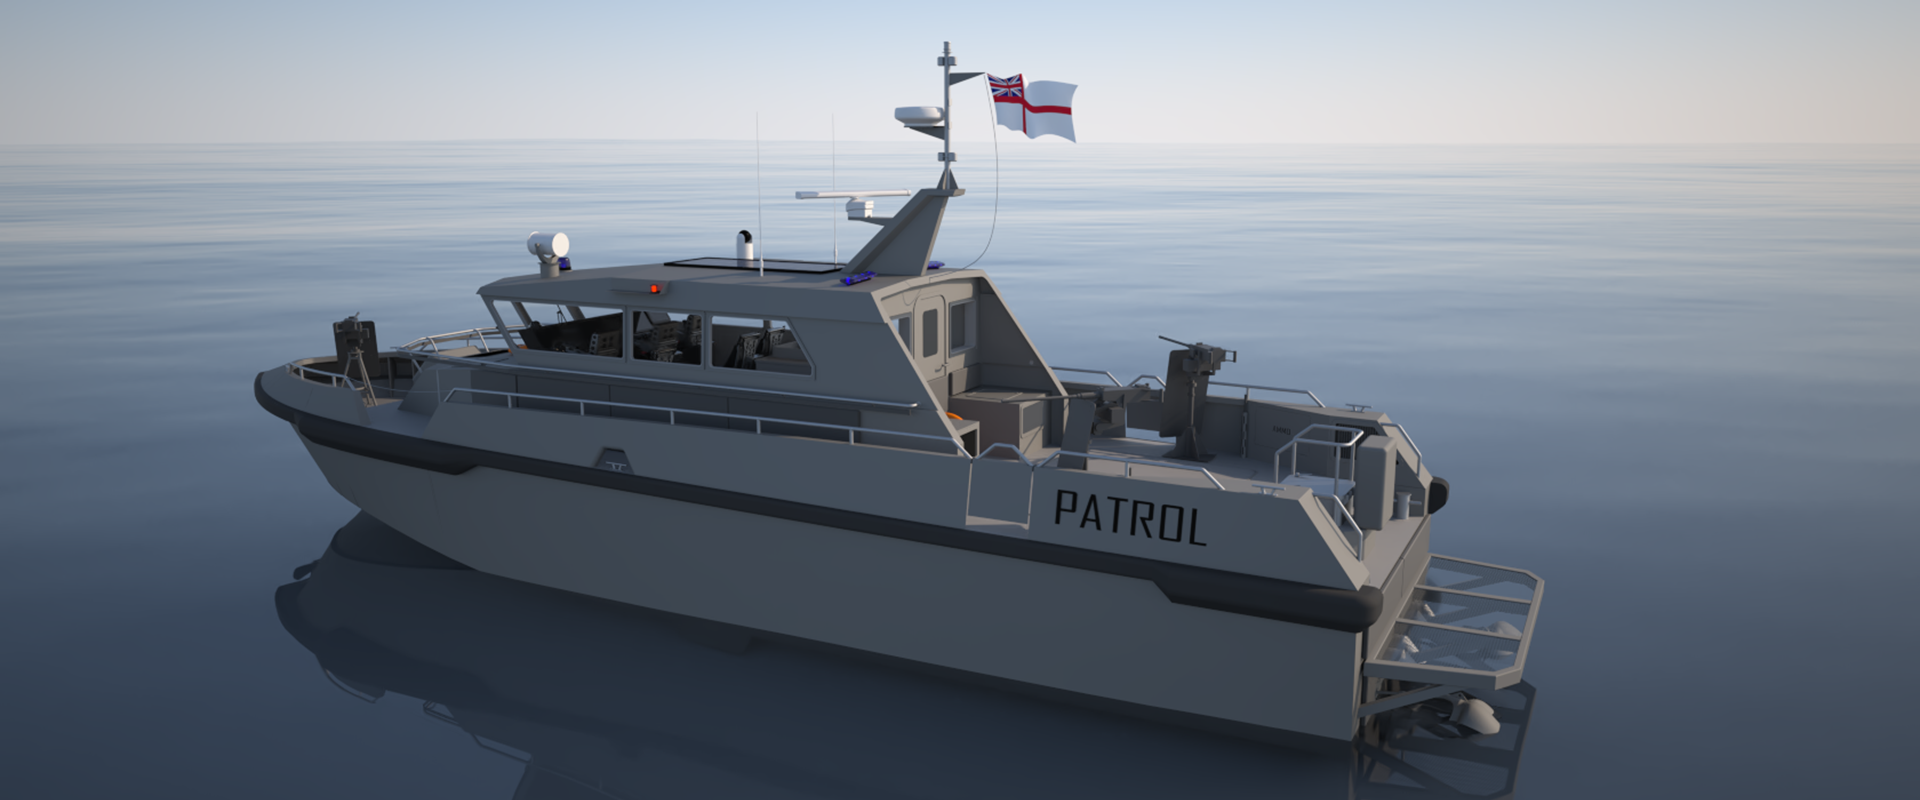 Fast patrol vessel designed by BMT